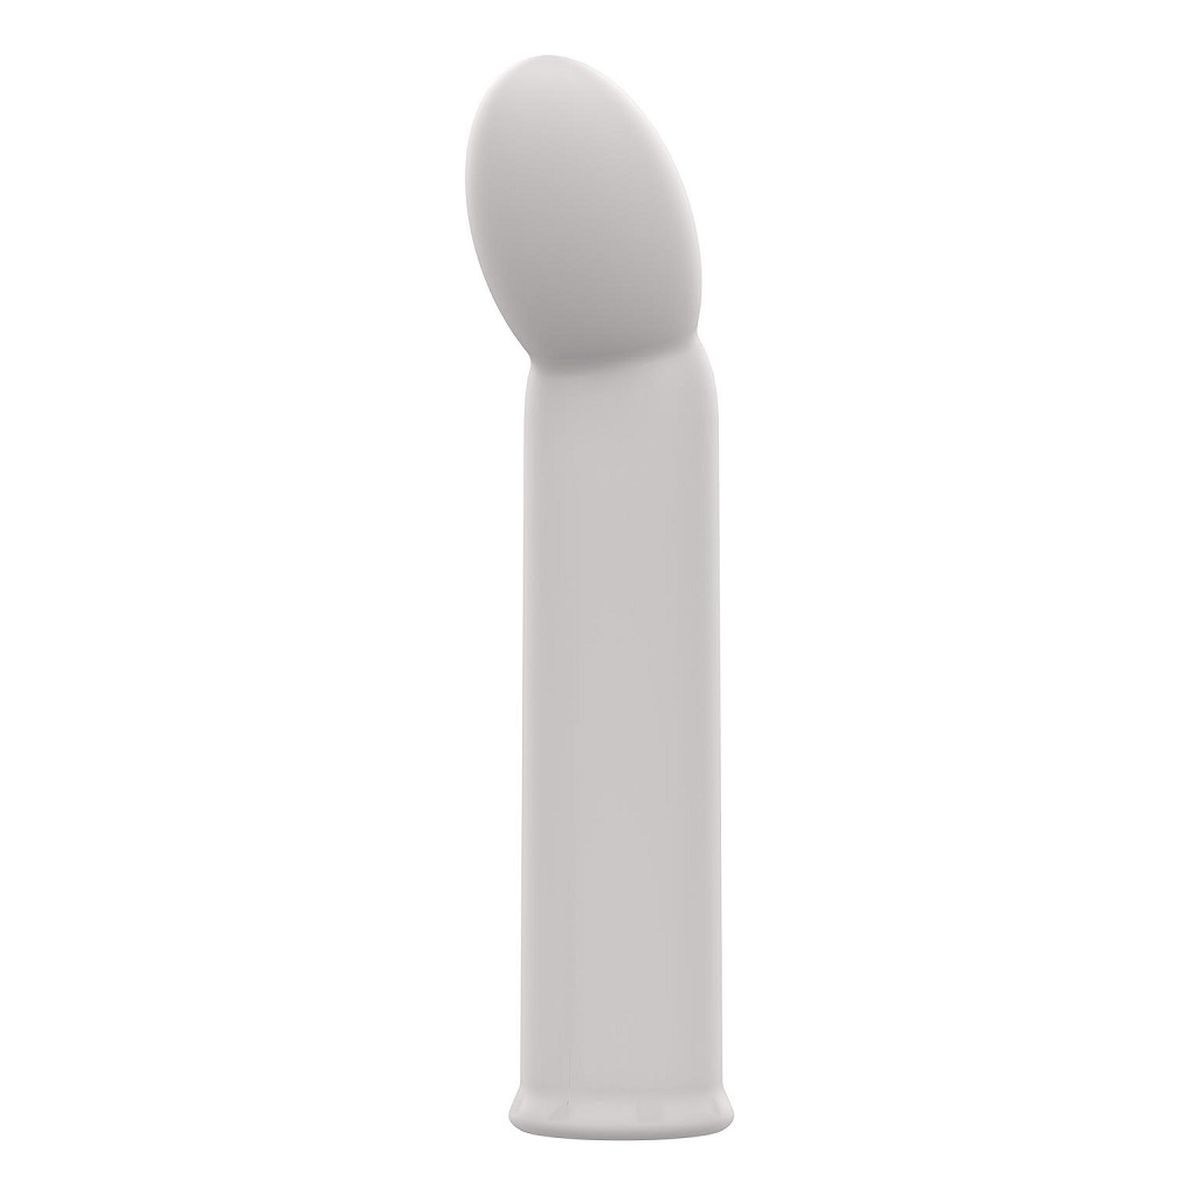 Dream Toys Nude aulora travel g-spot vibrator wibrator do punktu g